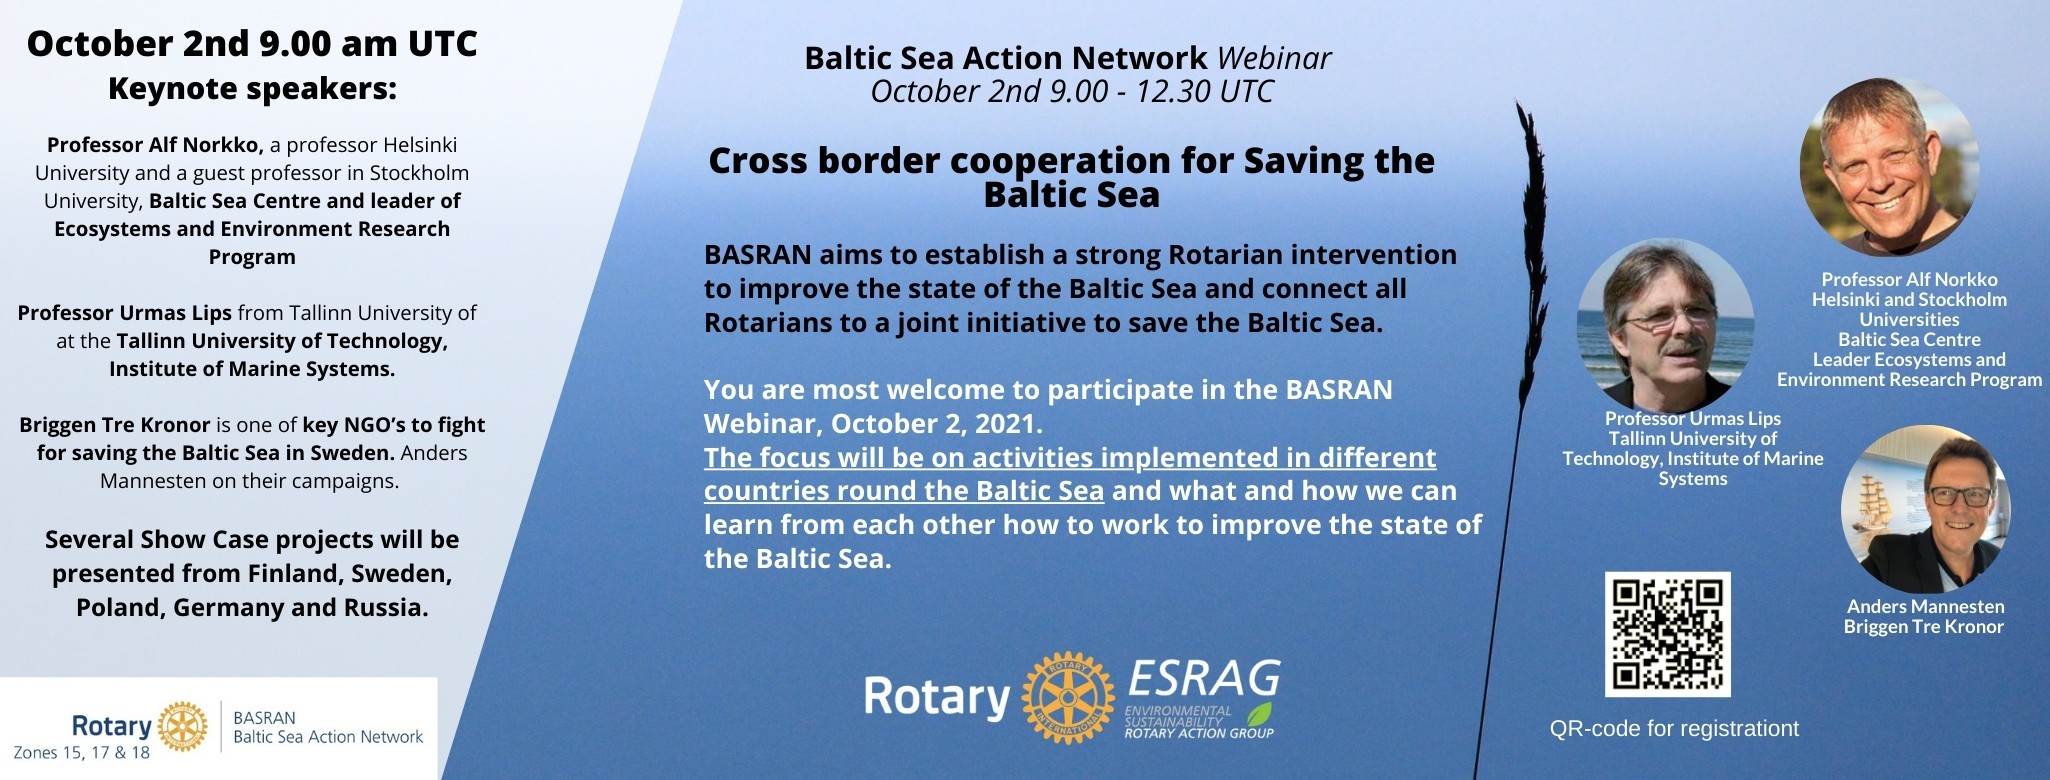 Cross border cooperation for Saving the Baltic Sea